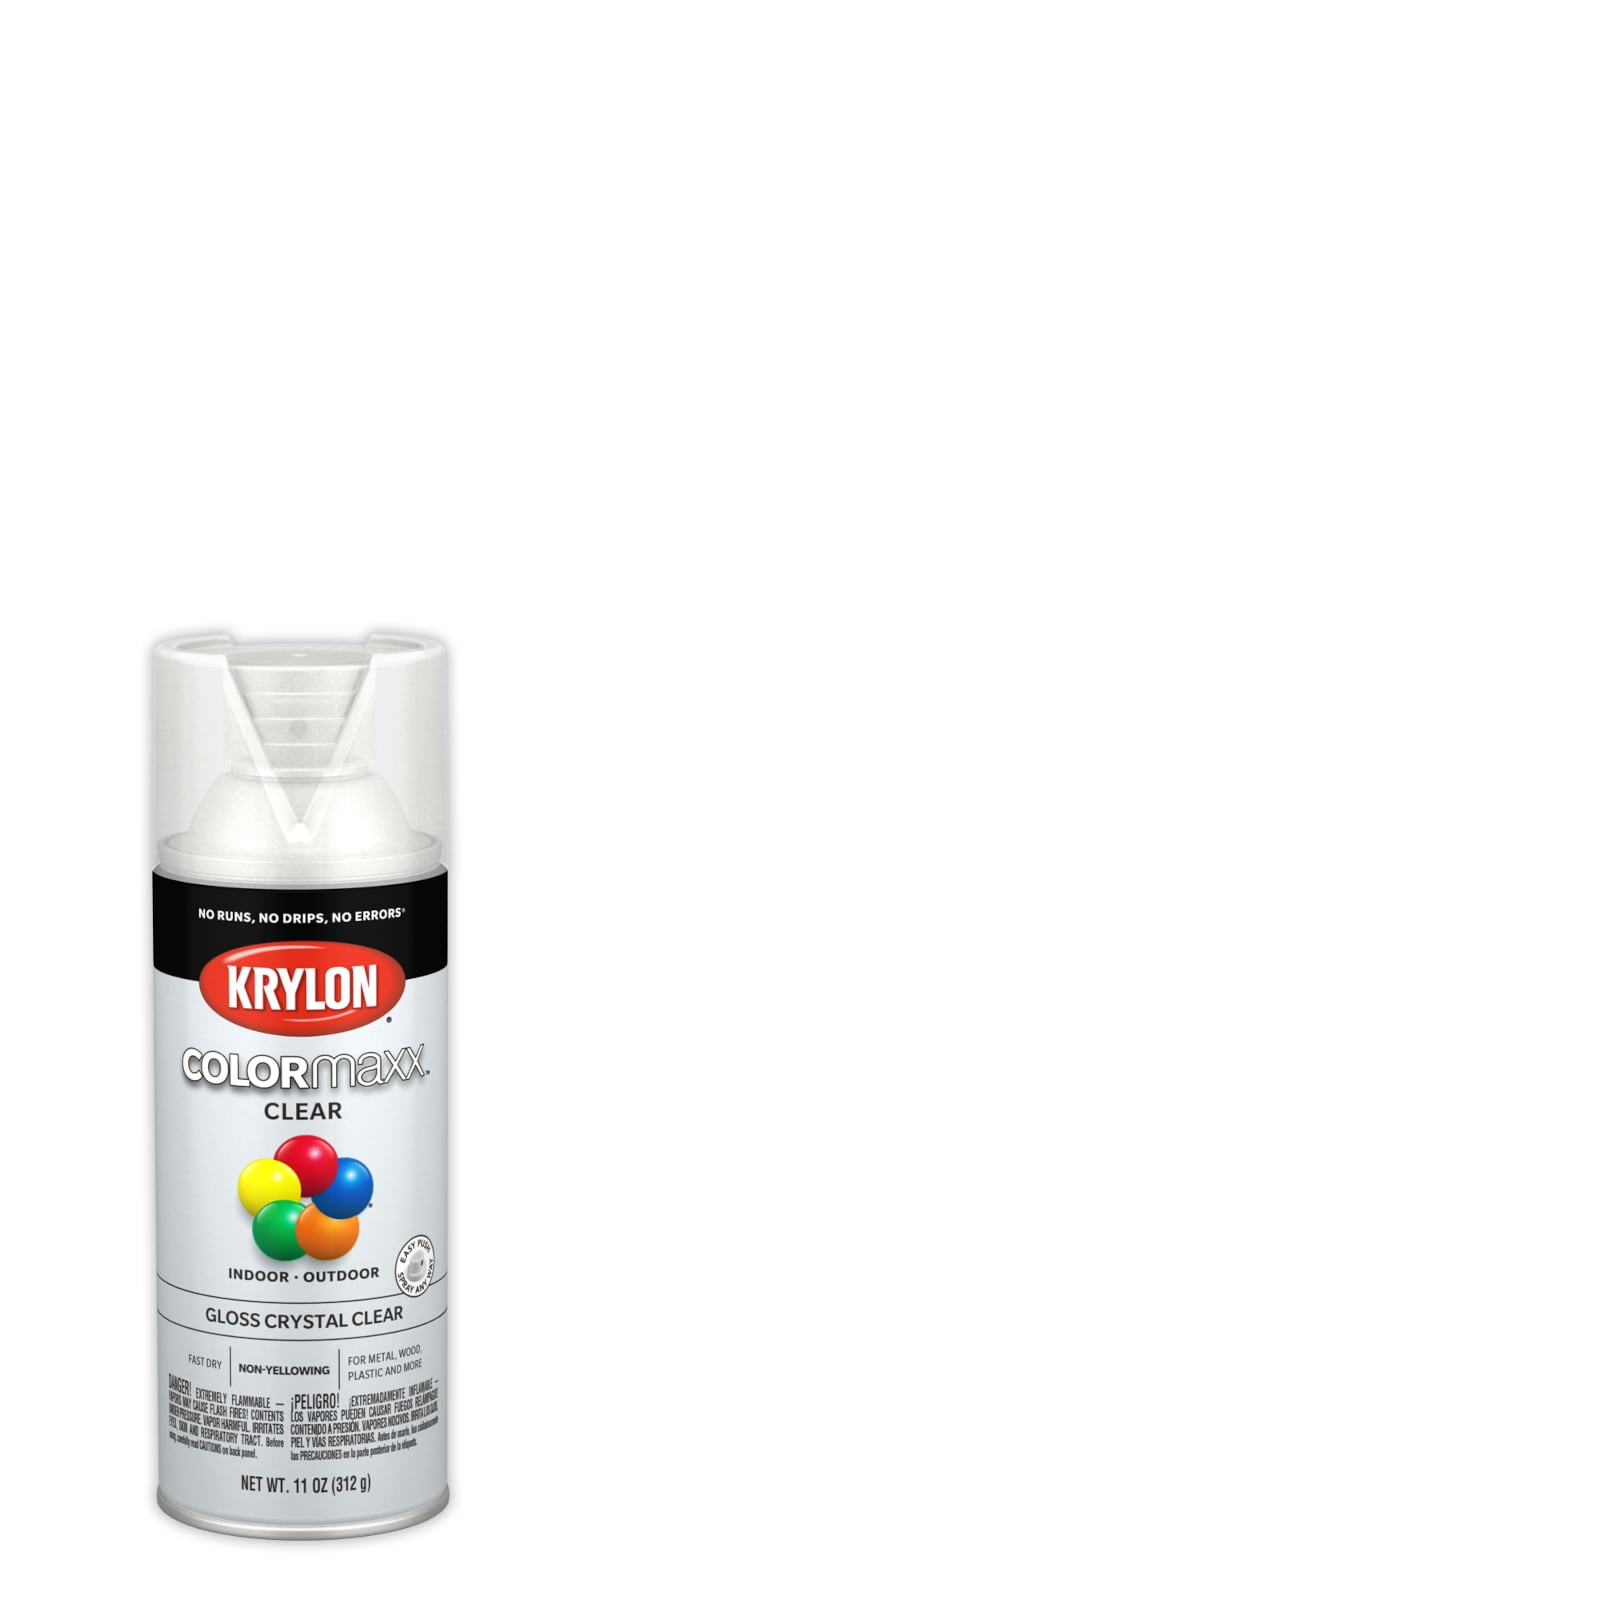 TRUE VALUE MFG COMPANY PDS7-AER Premium Decor Spray Paint, Clear Gloss,  12-oz.